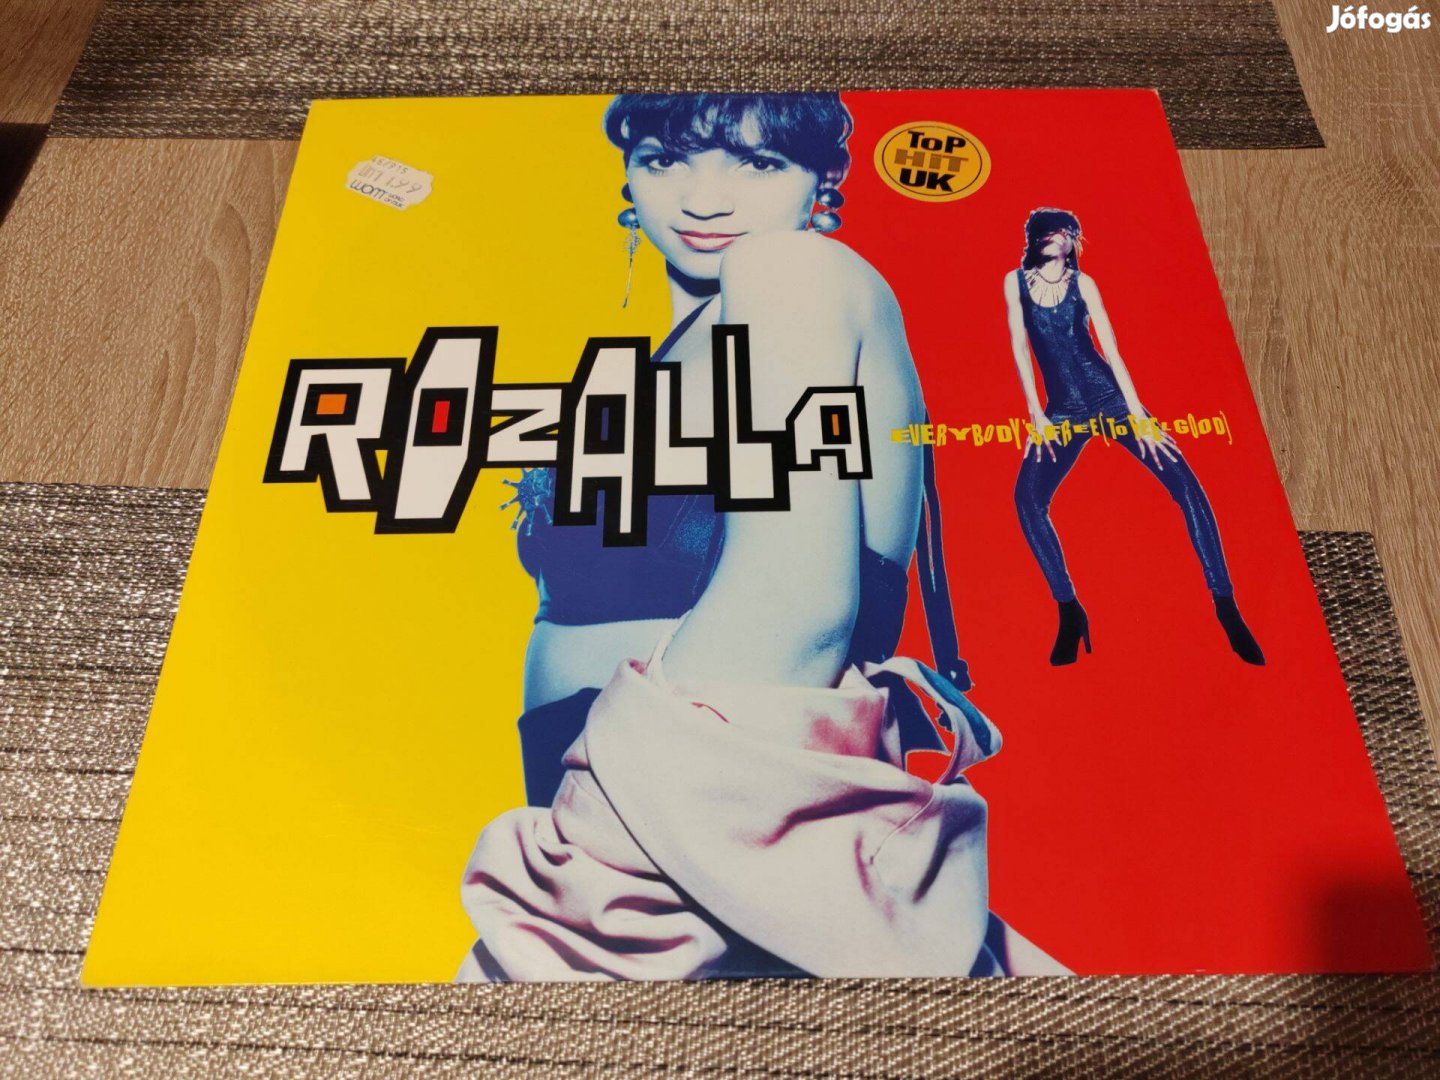 Rozalla maxi vinyl